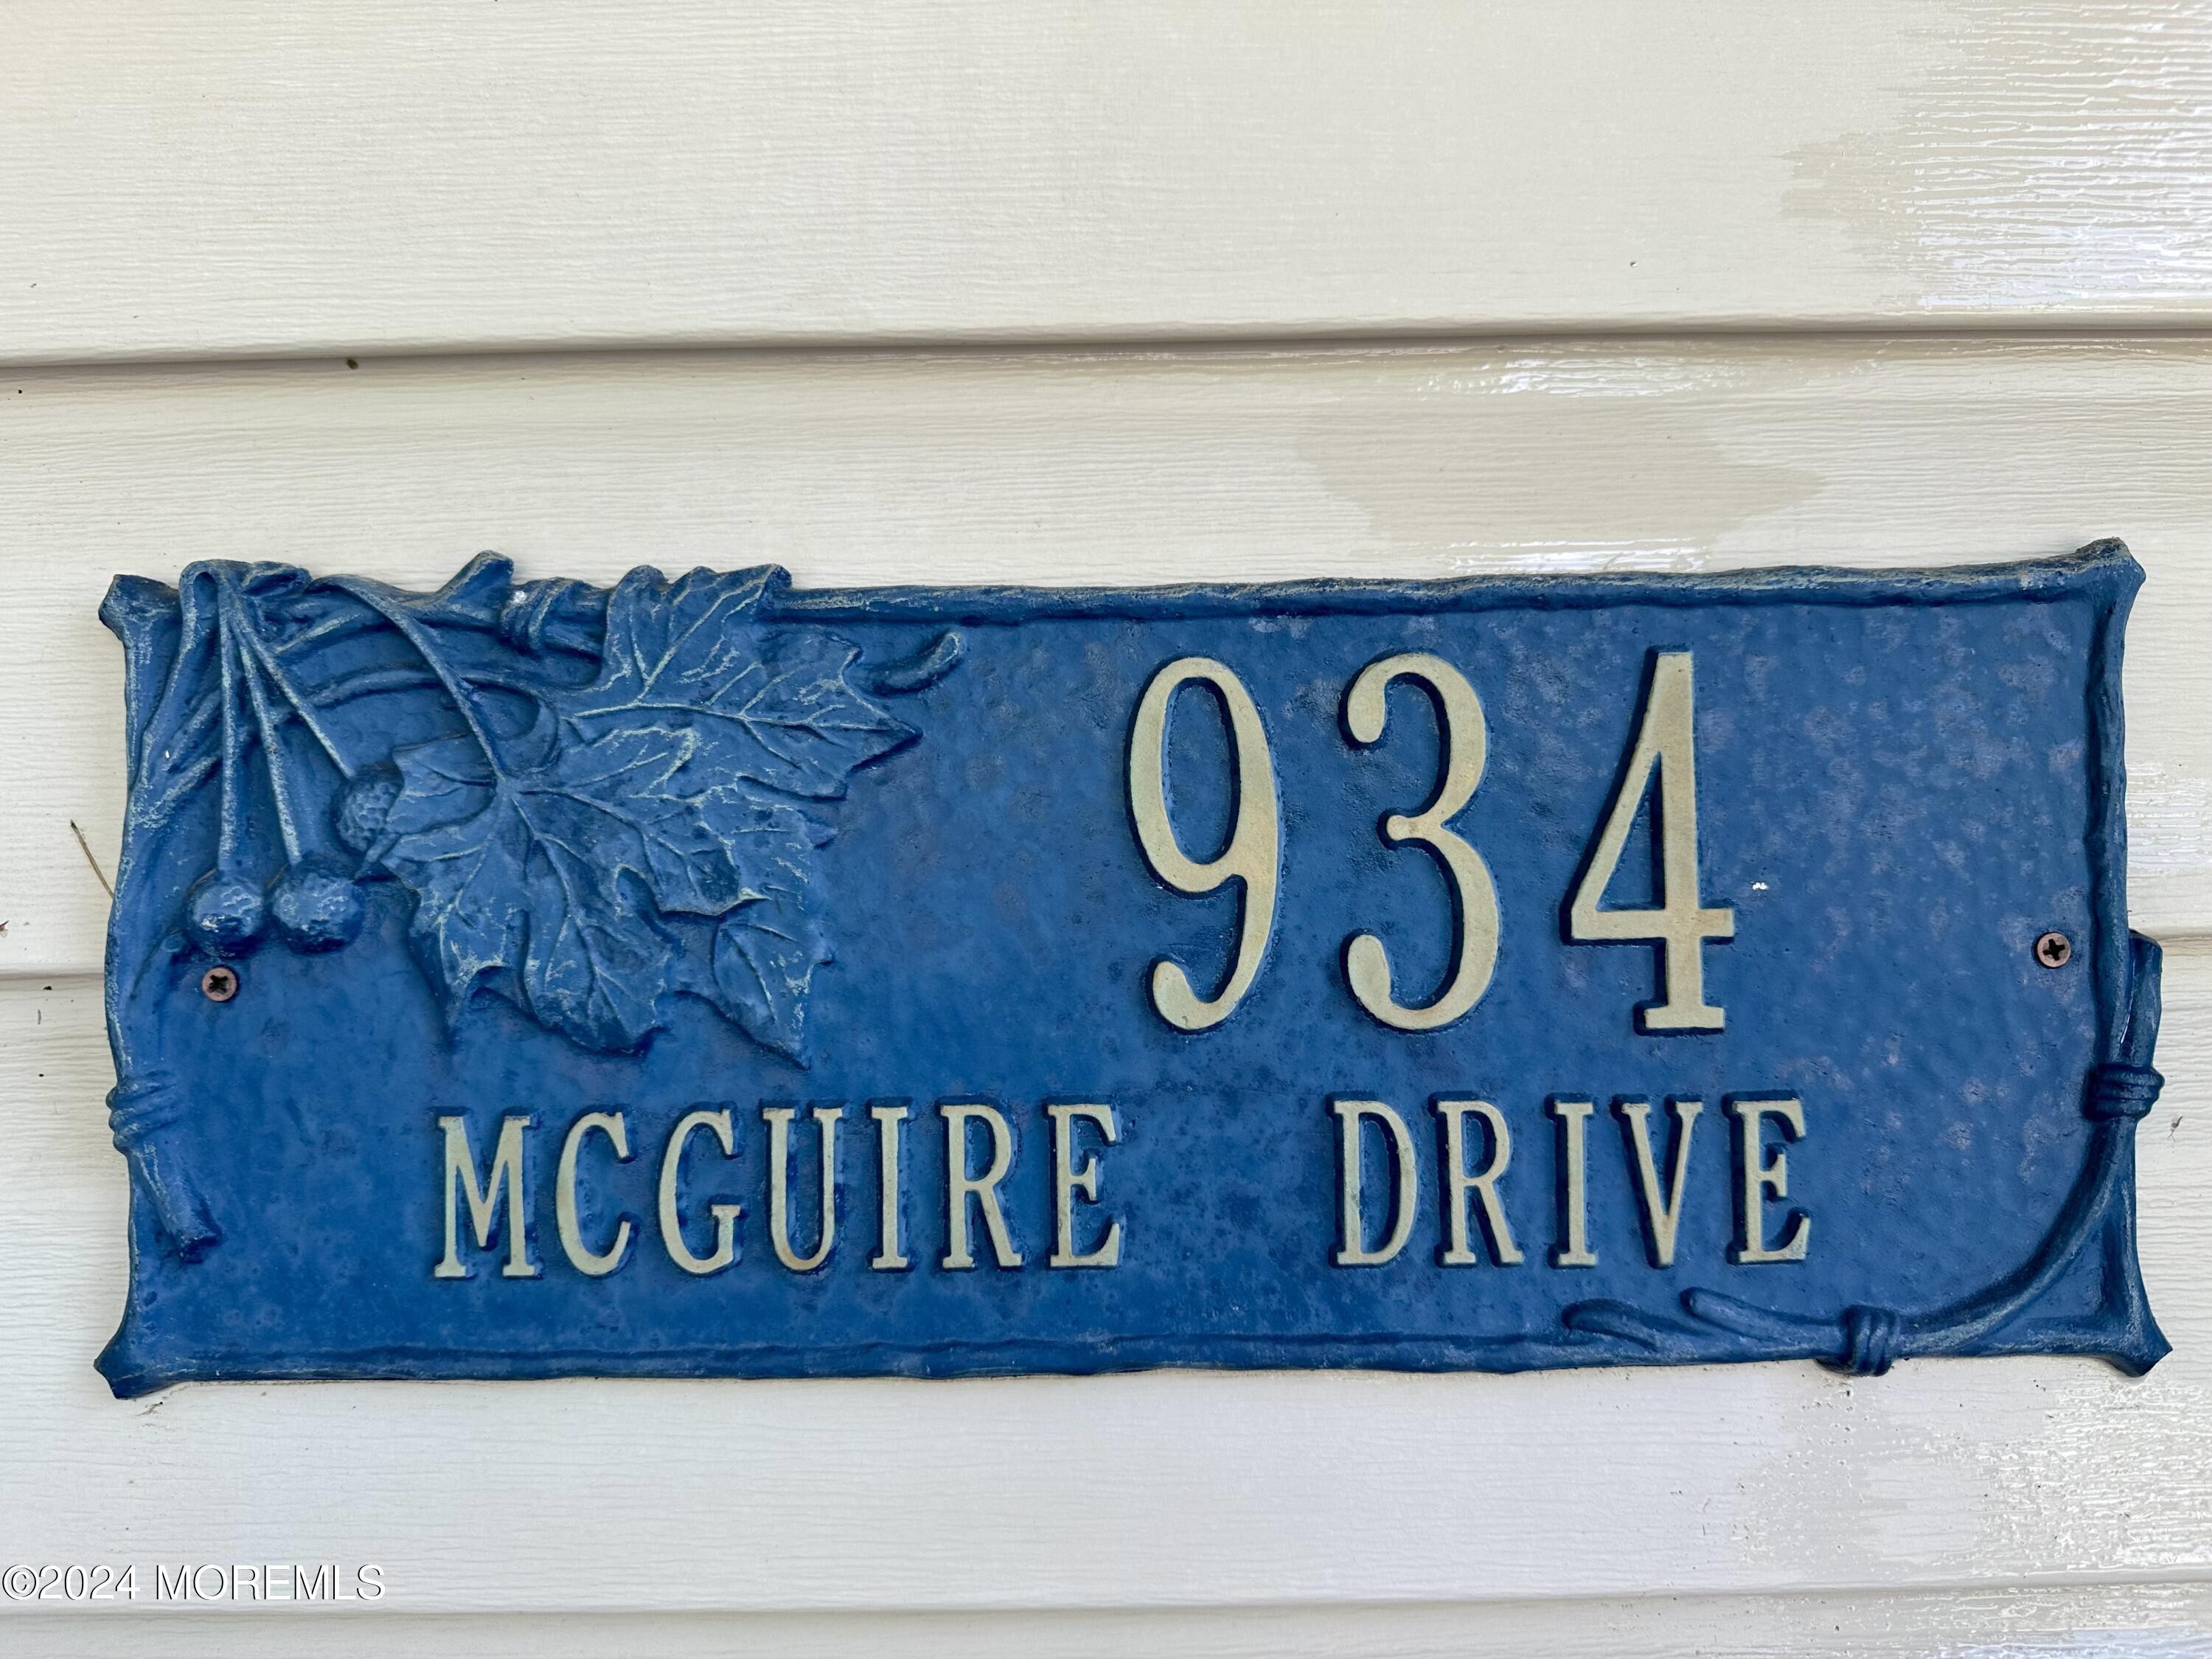 17. 934 Mcguire Drive